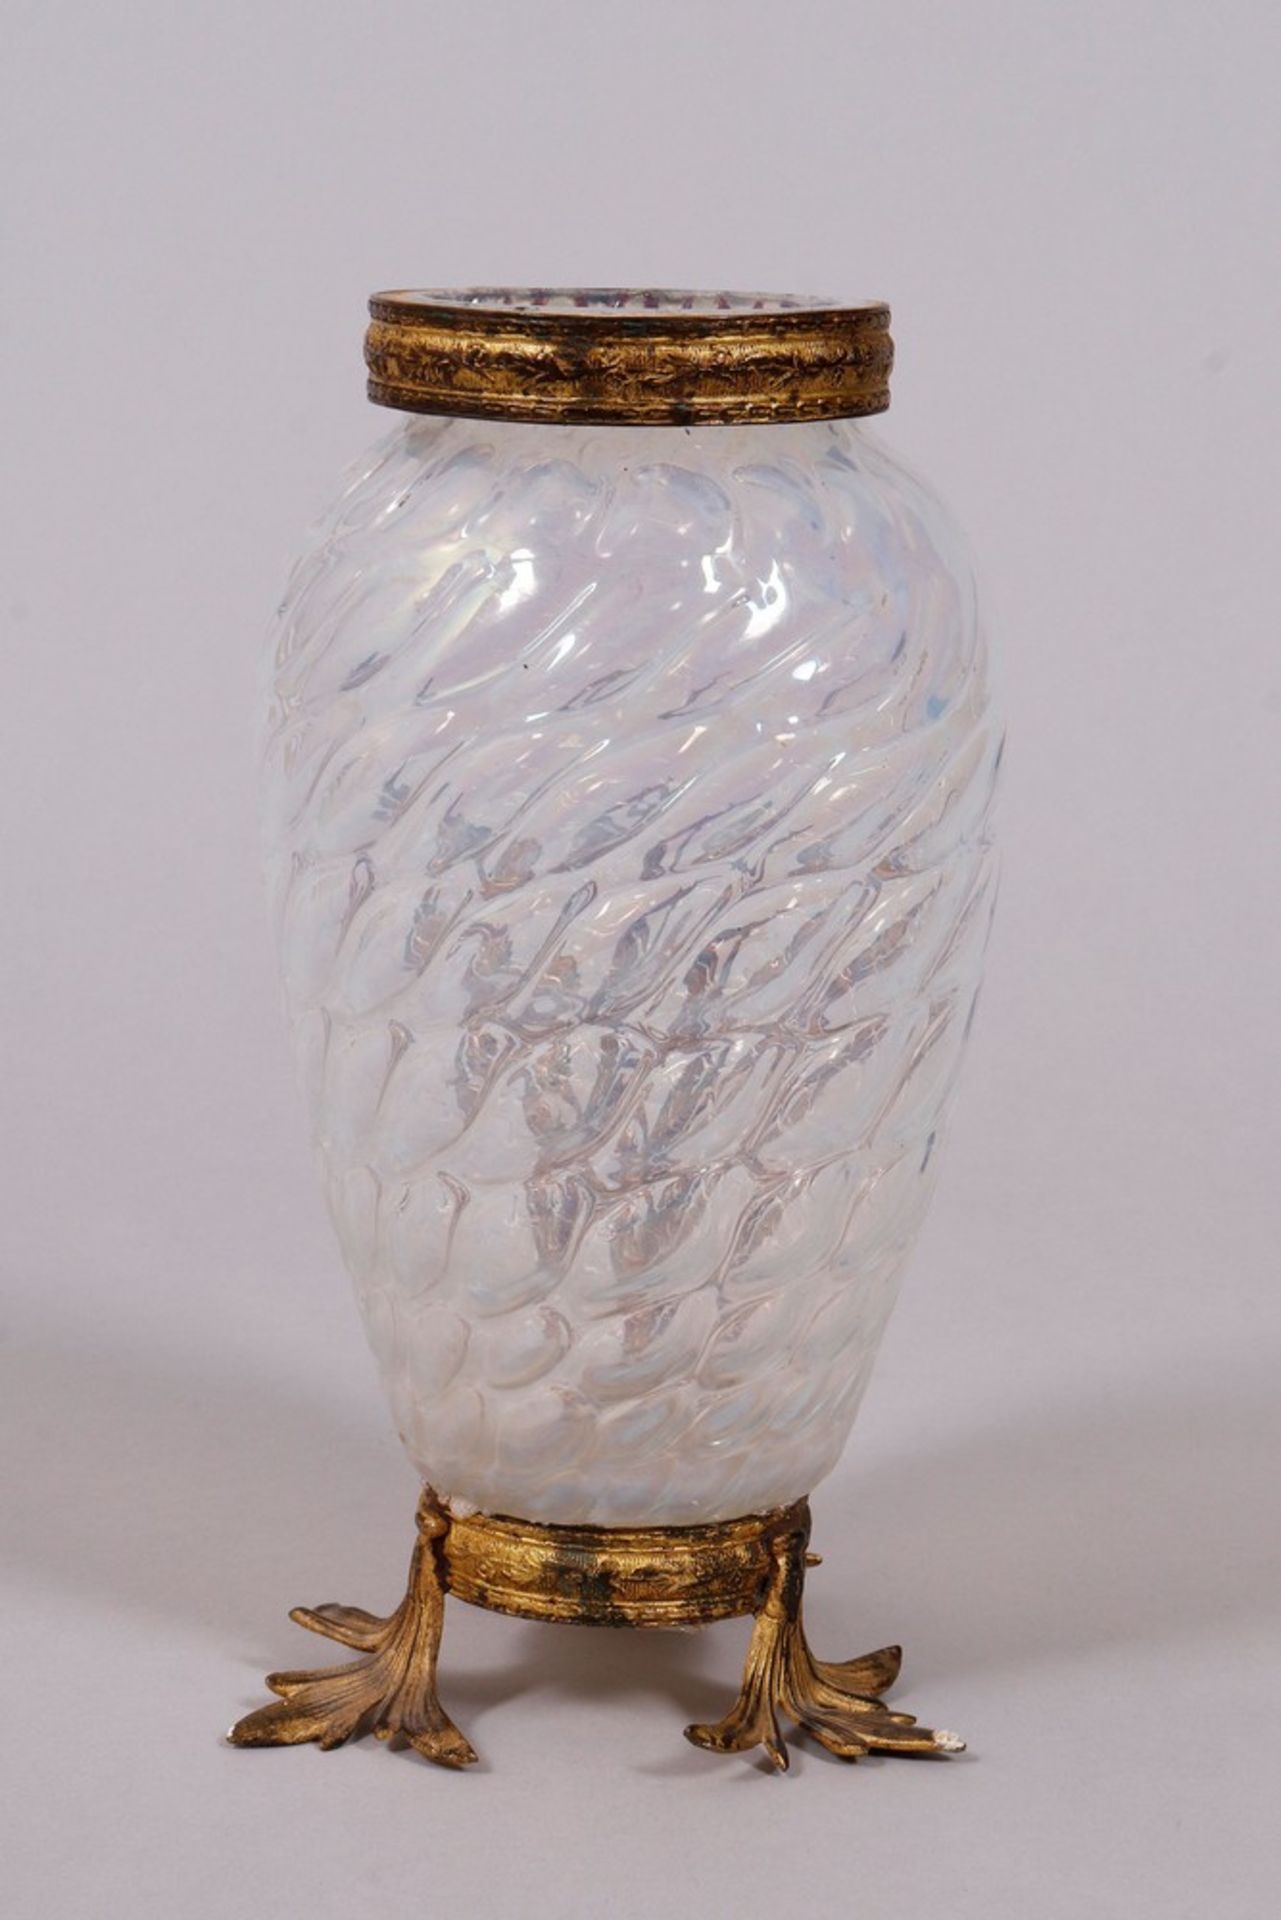 Art Nouveau vase, probably Bohemia, c. 1900 - Image 3 of 5